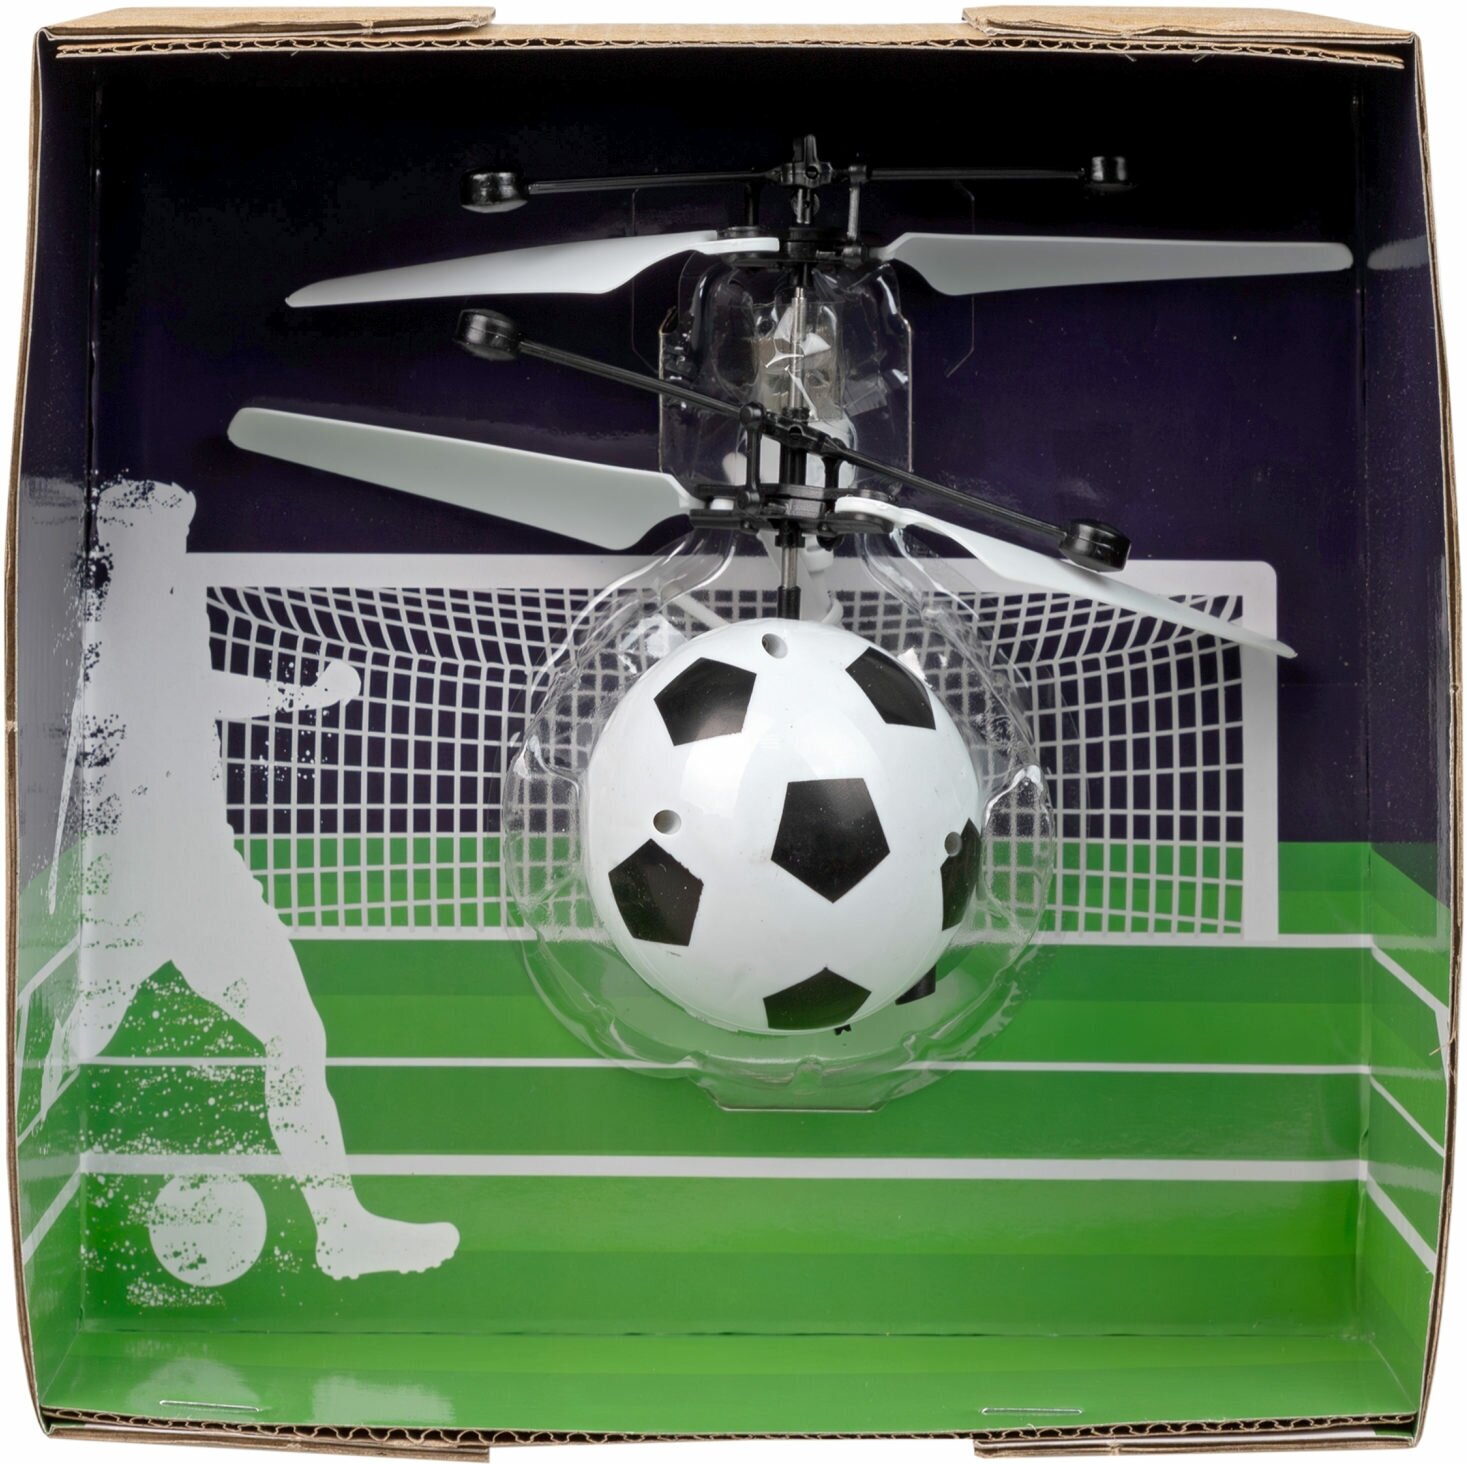 Летающий шар 1 TOY Gyro-Football, 20 см, белый/черный/синий